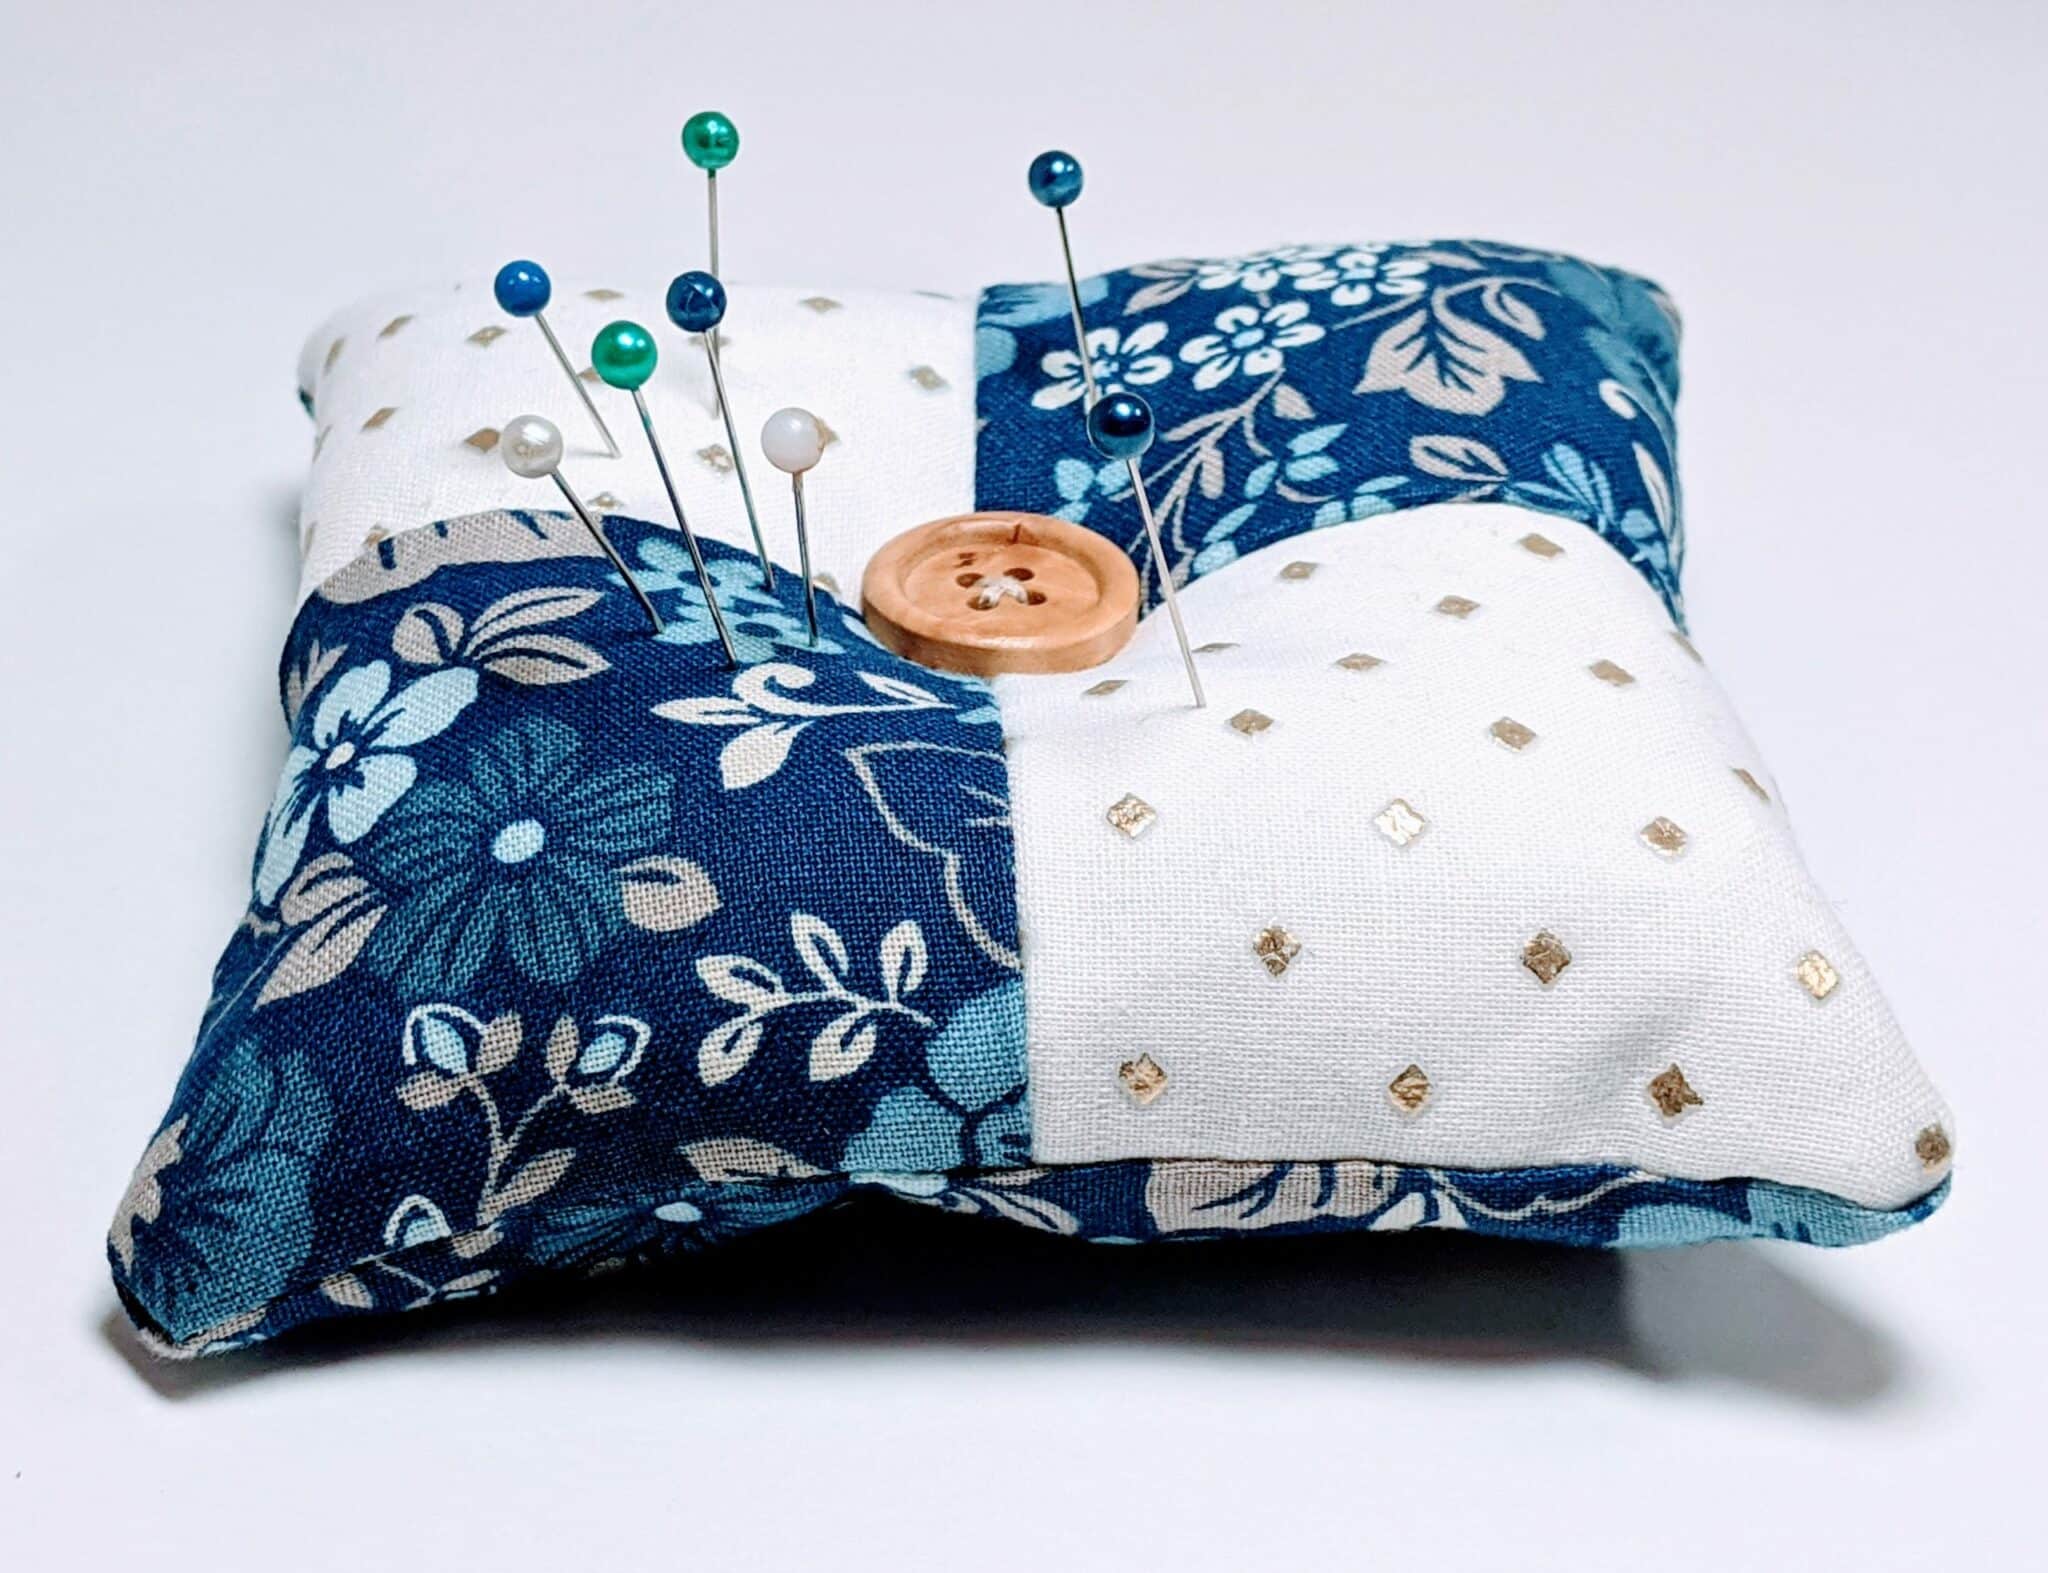 Pin Cushions Project – dropclothsamplers